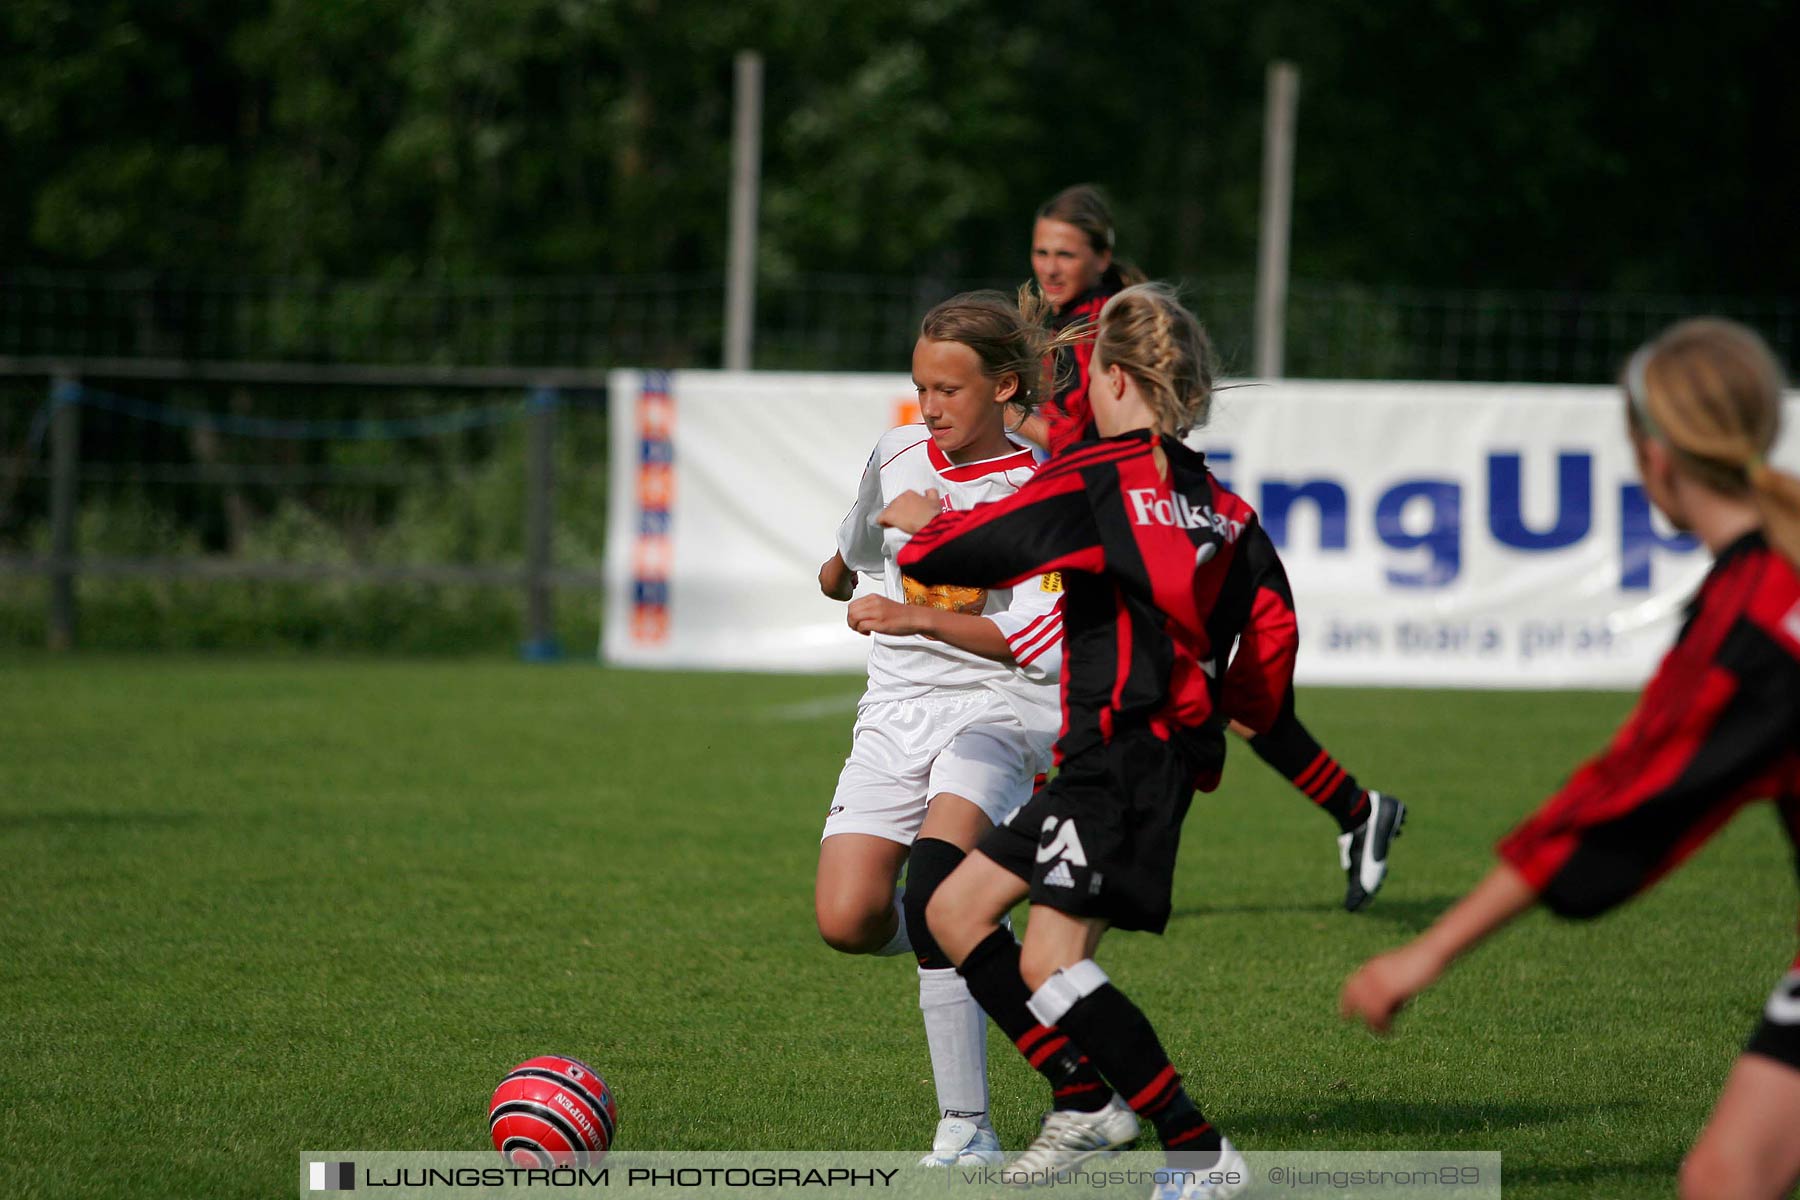 Ulvacupen 2006,mix,Åbrovallen,Ulvåker,Sverige,Fotboll,,2006,147368